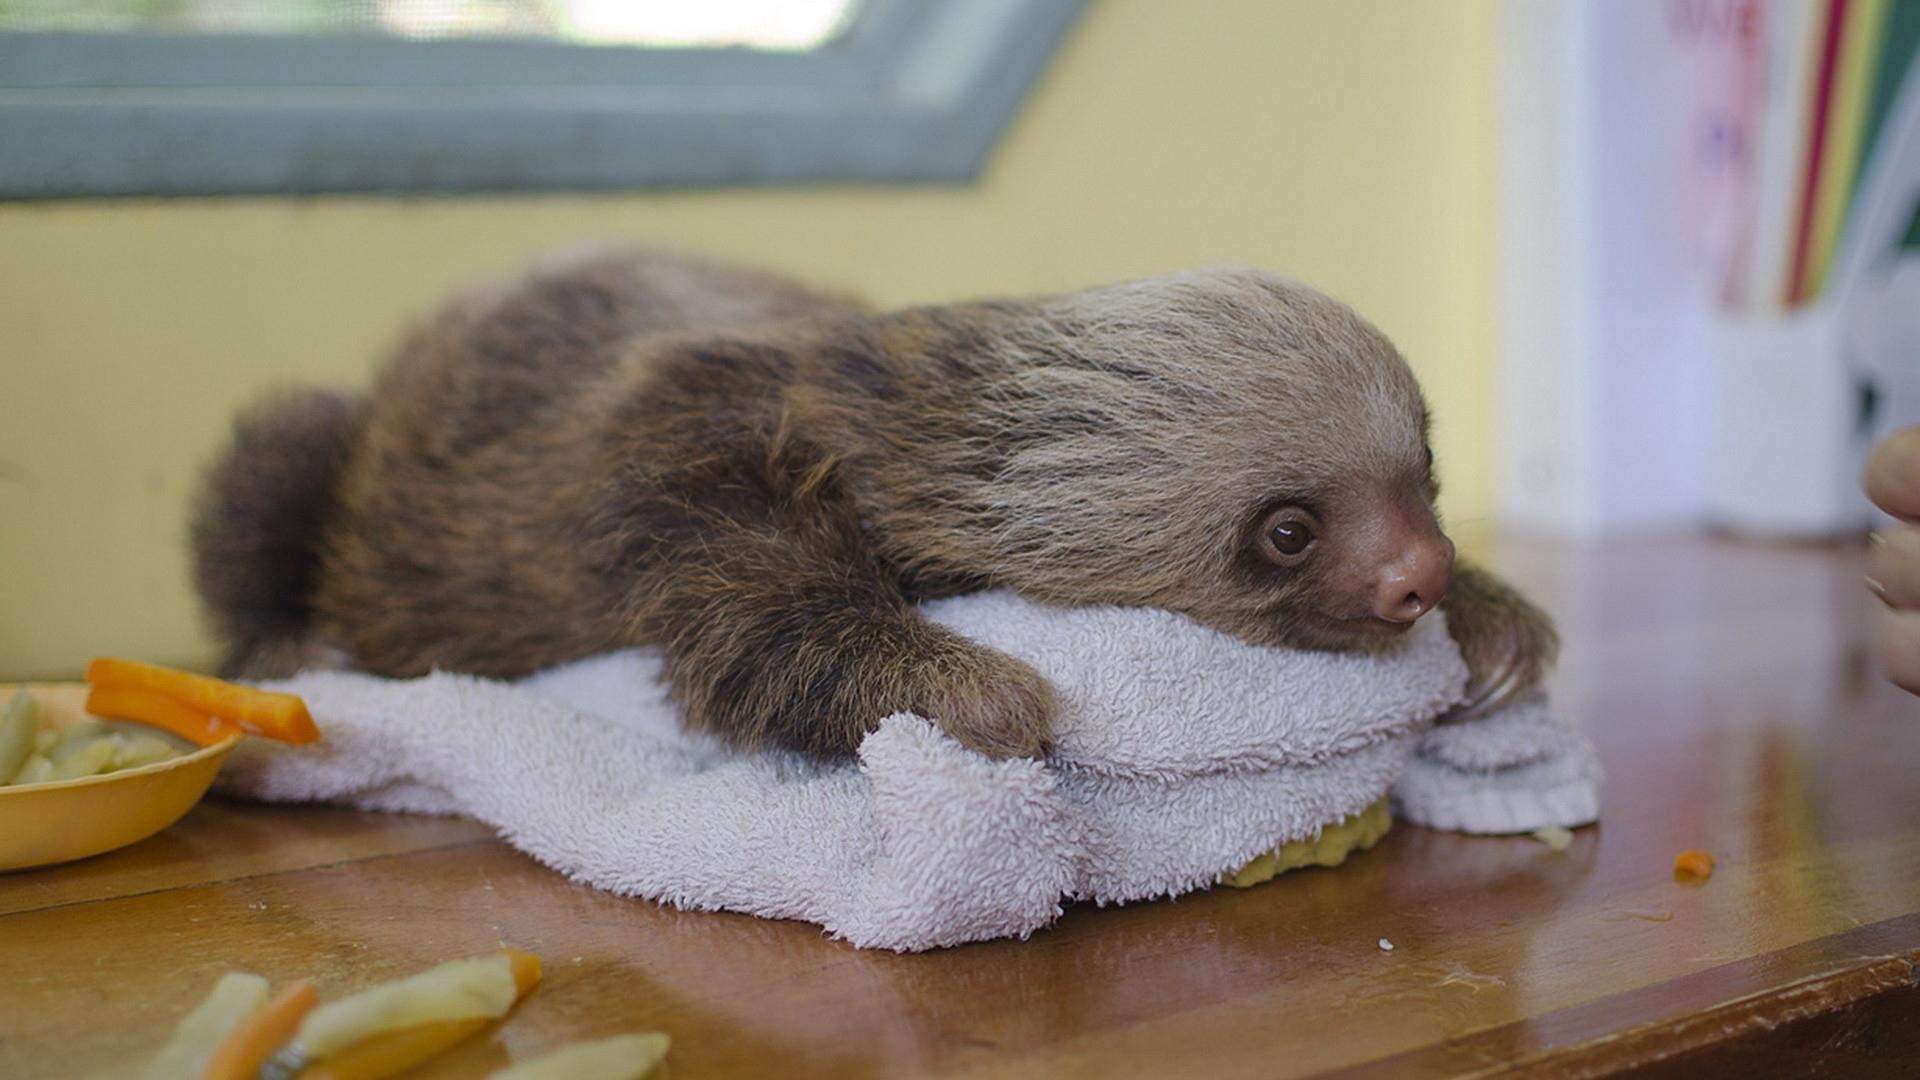 Download 1920x1080 HD Wallpaper sloth baby cute muzzle